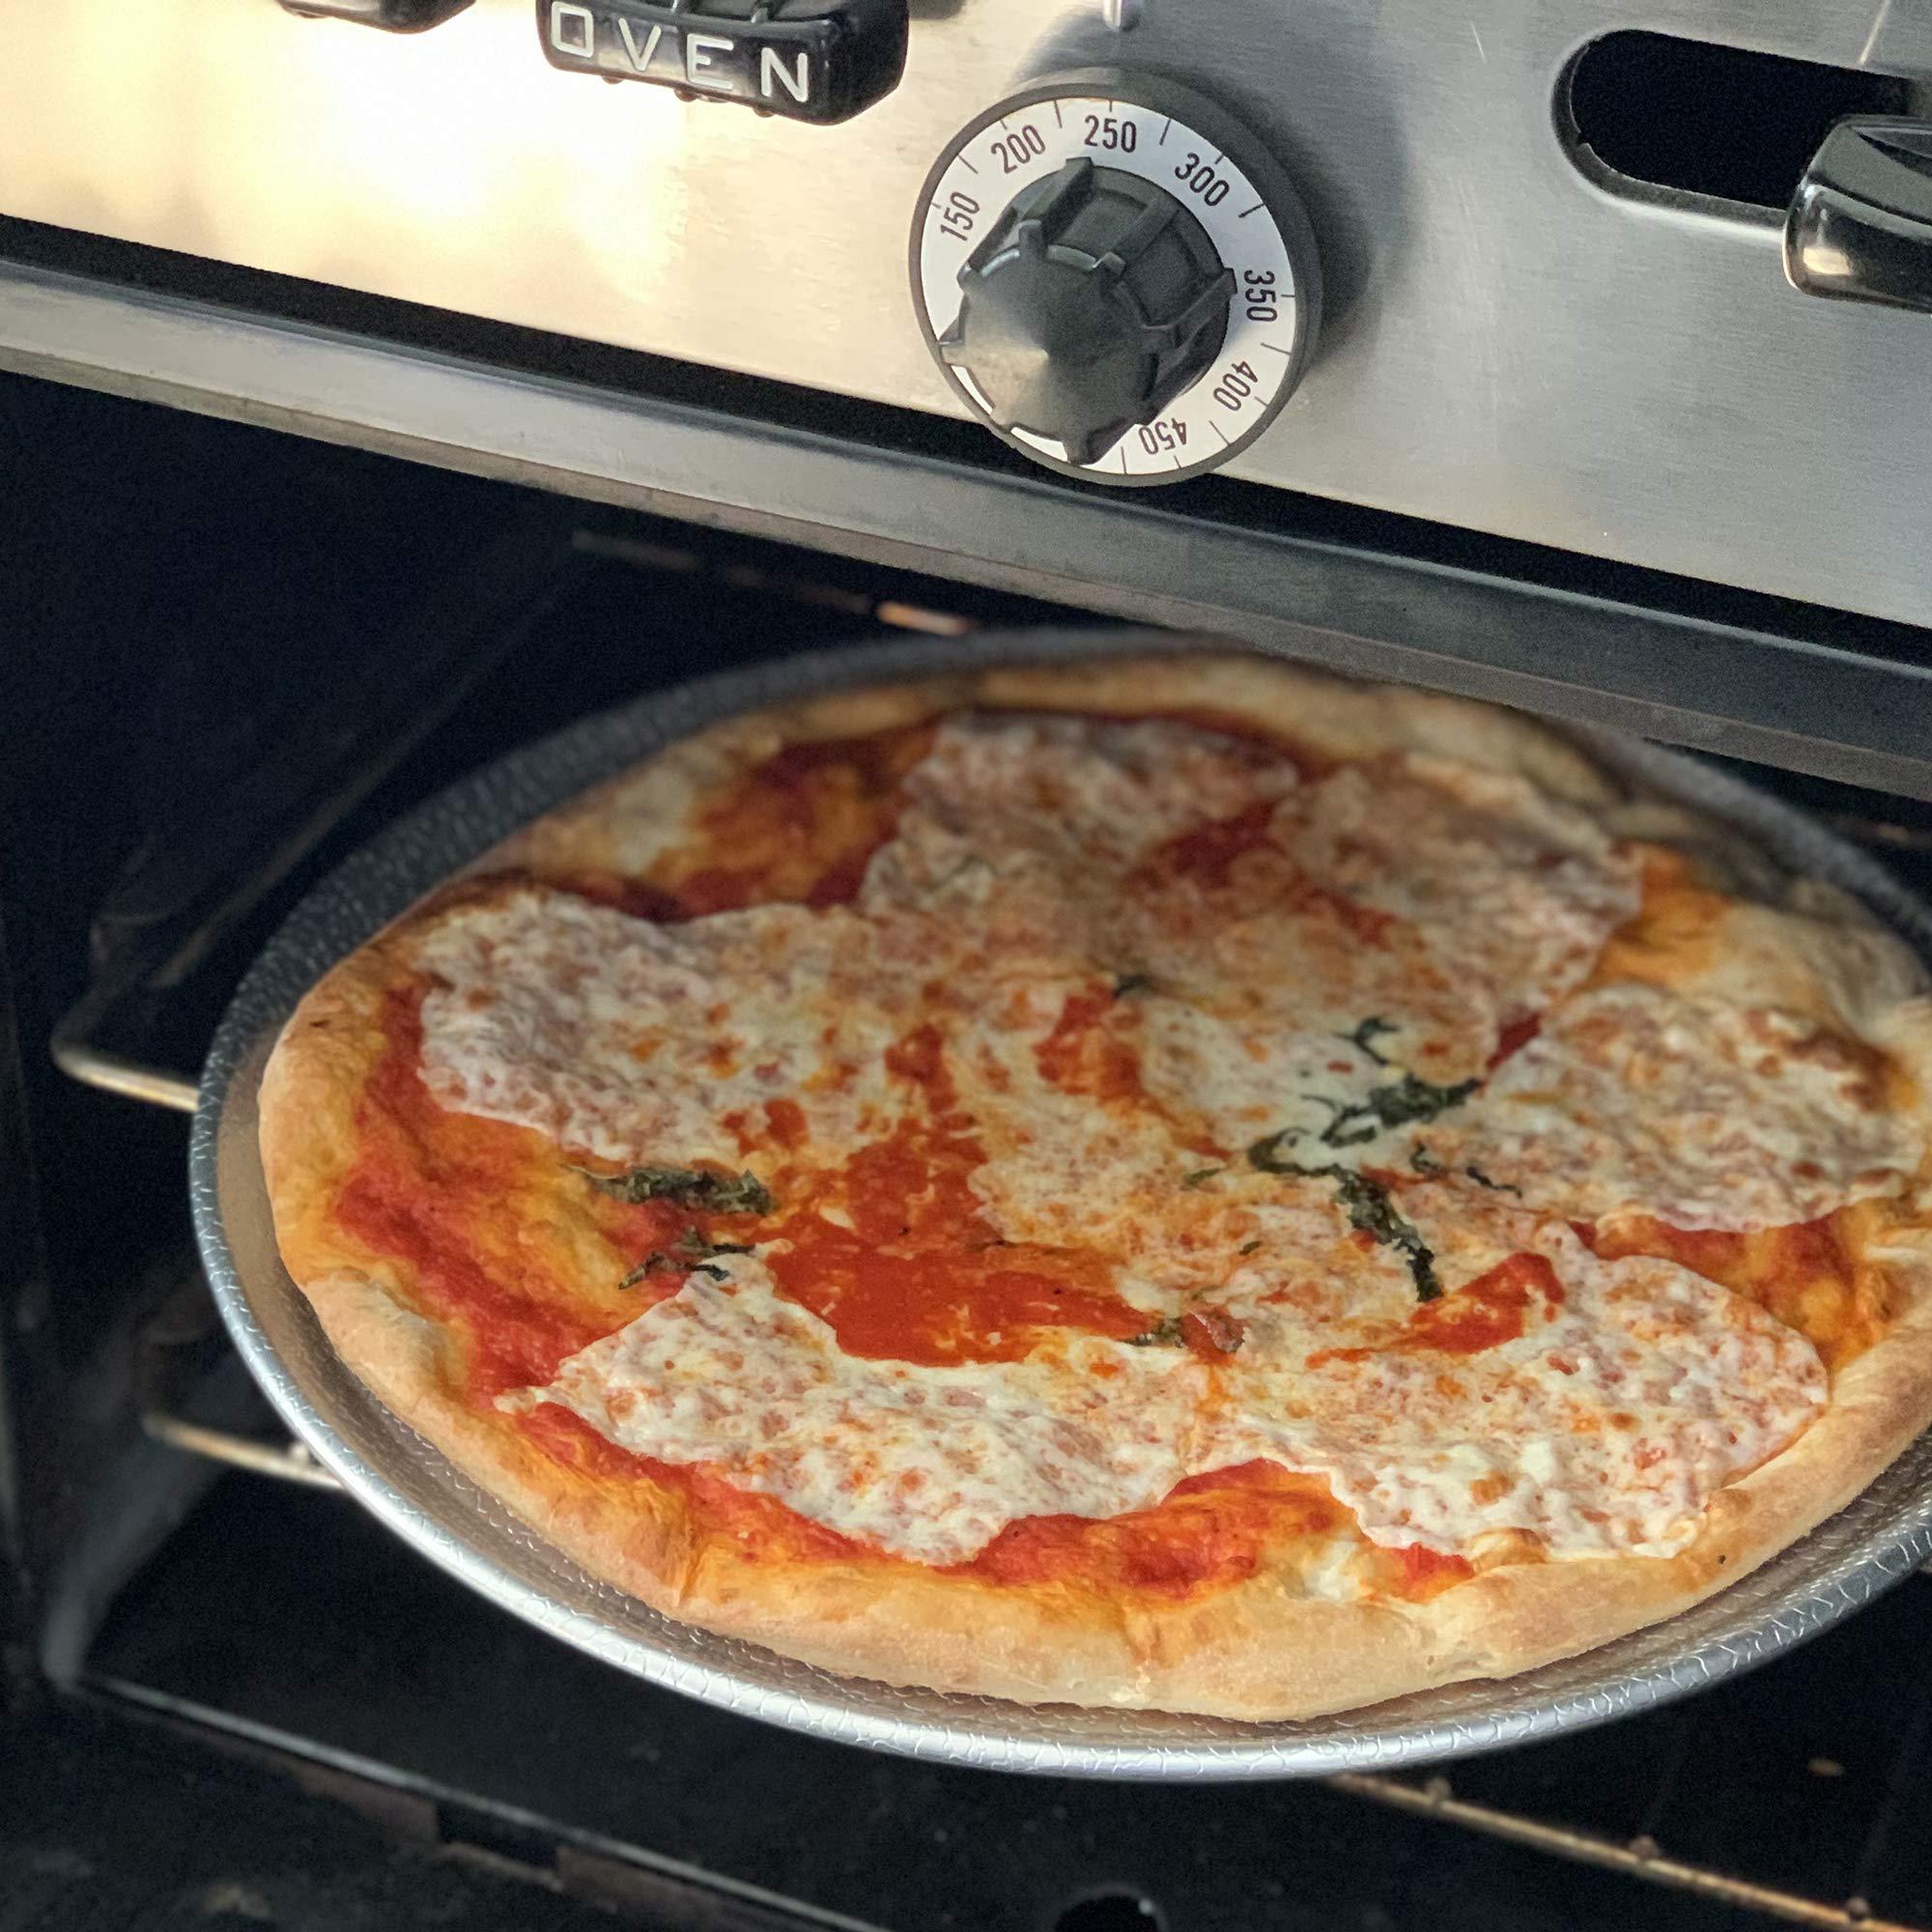 doughmakers 10181 15" pizza pan commercial grade aluminum,metallic